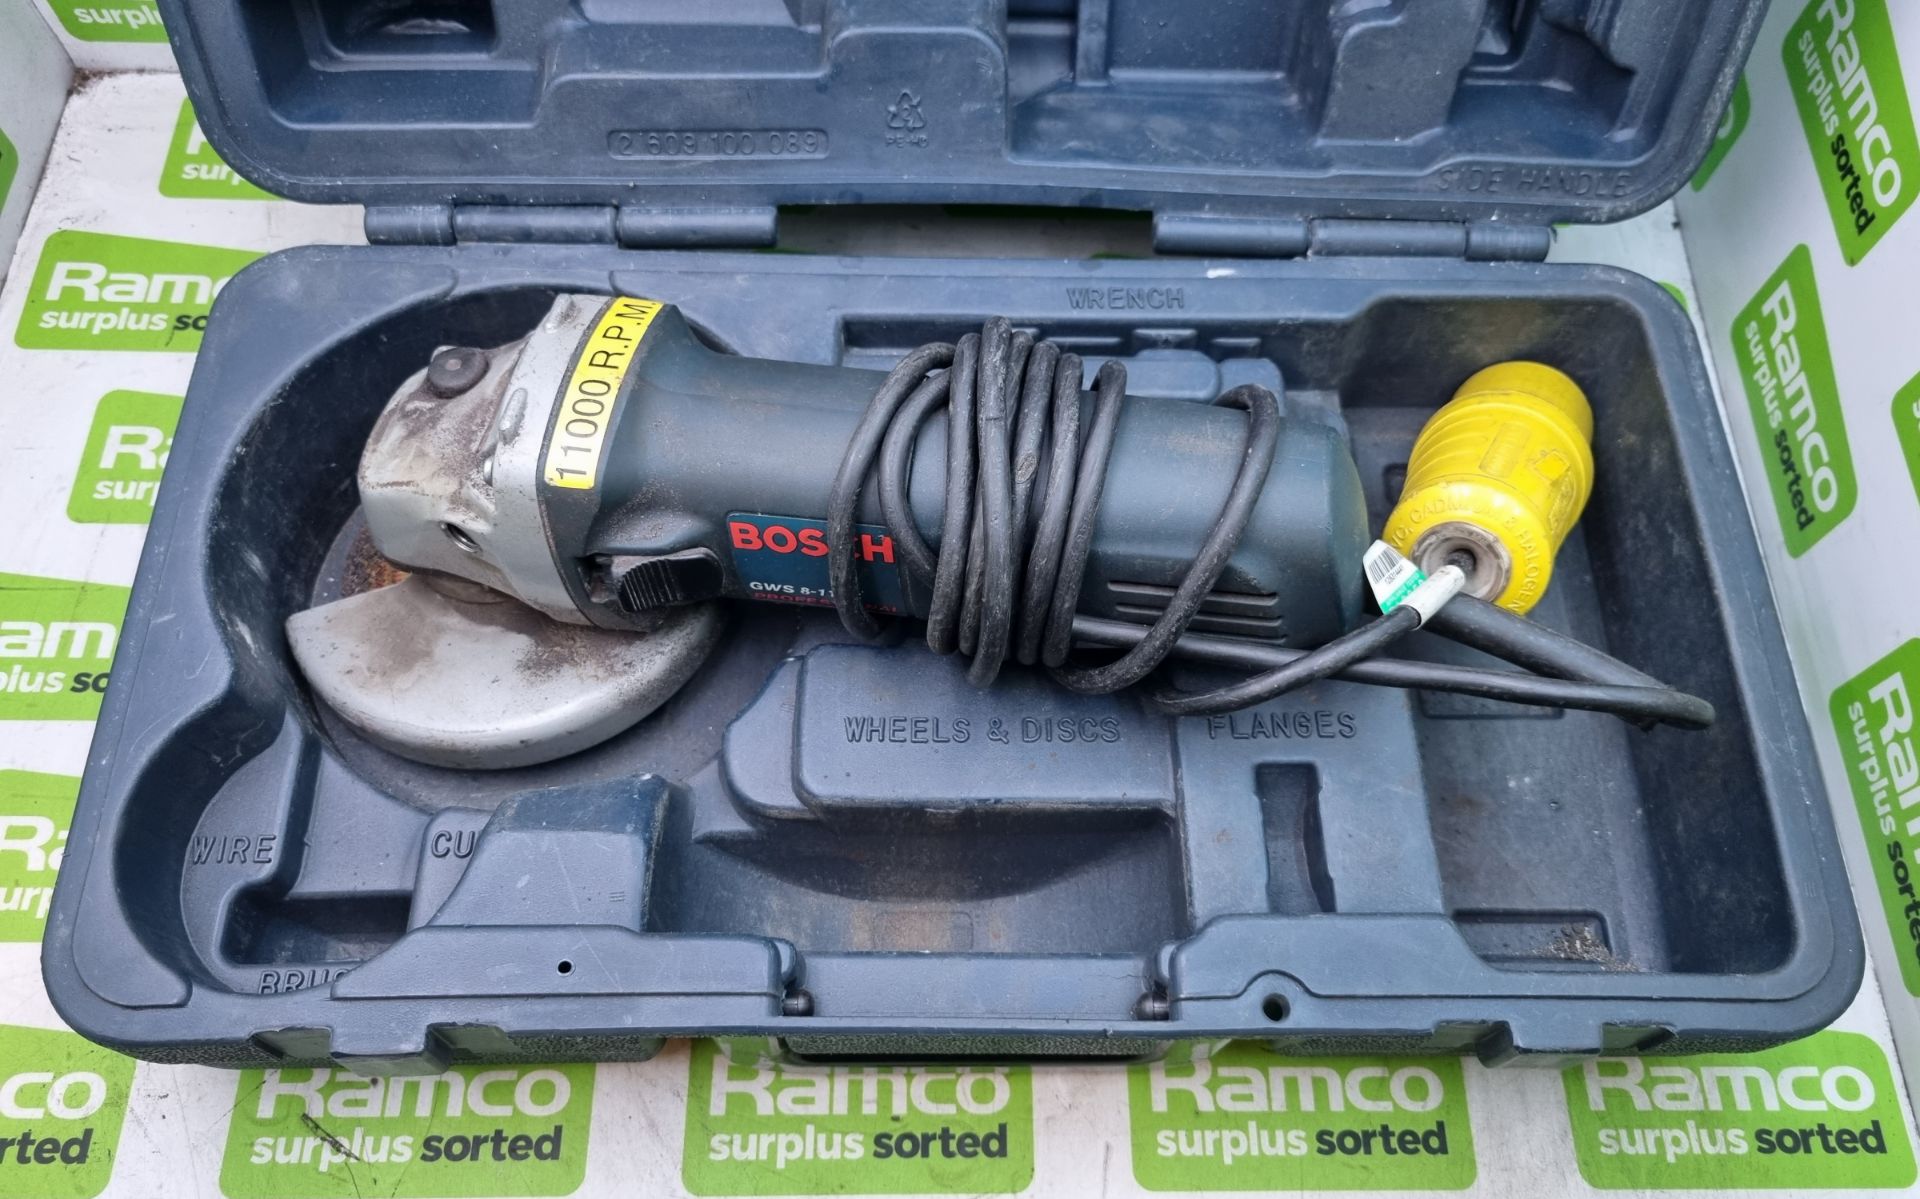 Bosch GWS 8-115C 110V angle grinder in hard plastic carry case - Image 2 of 4